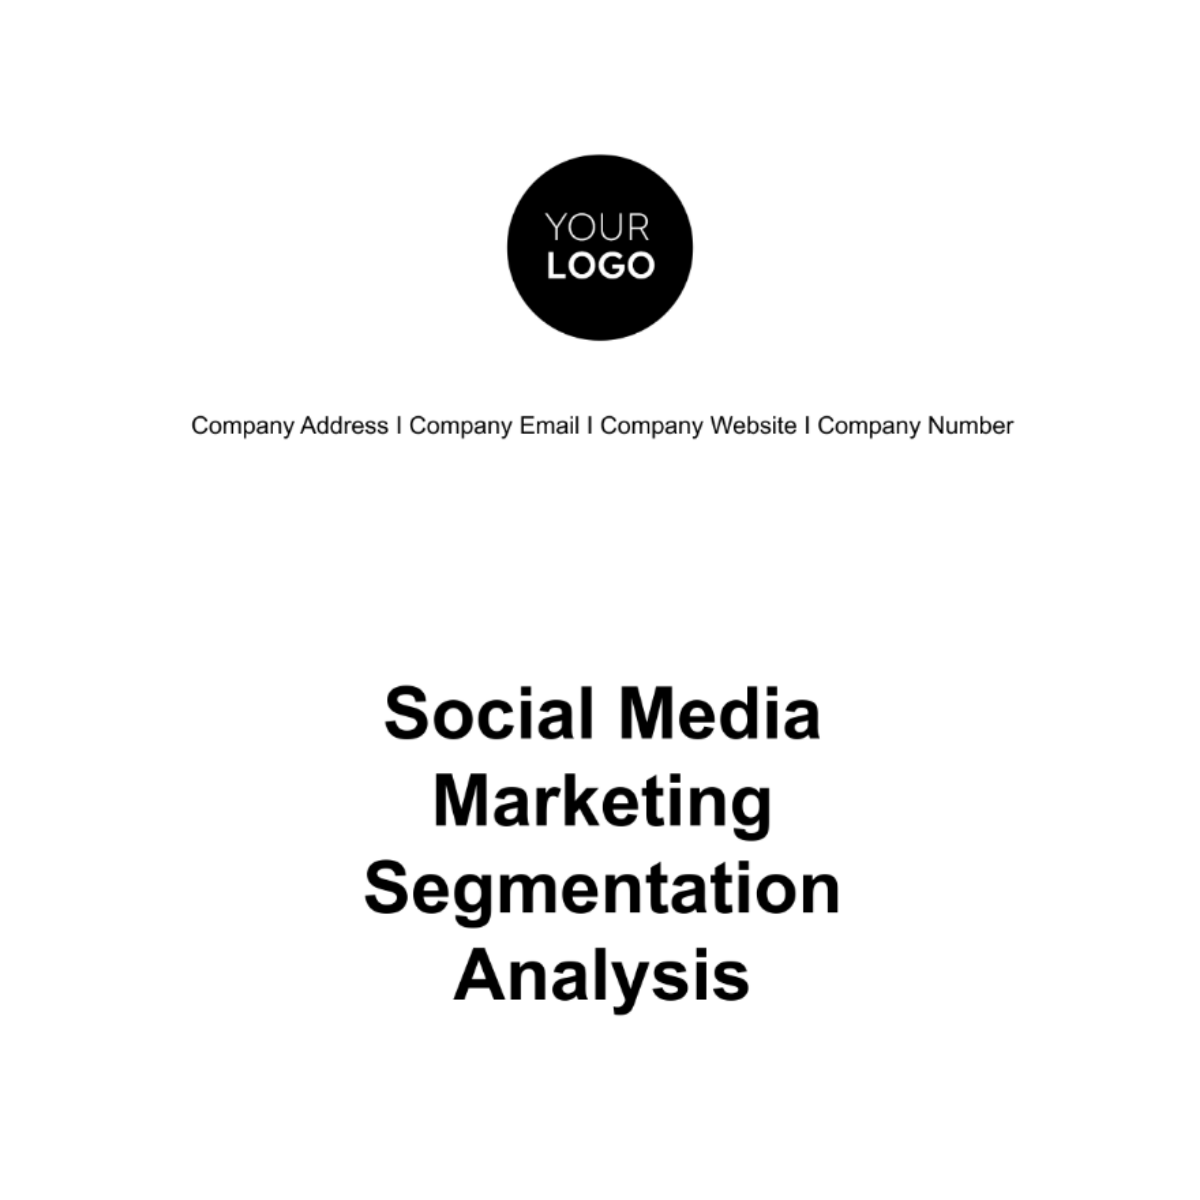 Social Media Marketing Segmentation Analysis Template